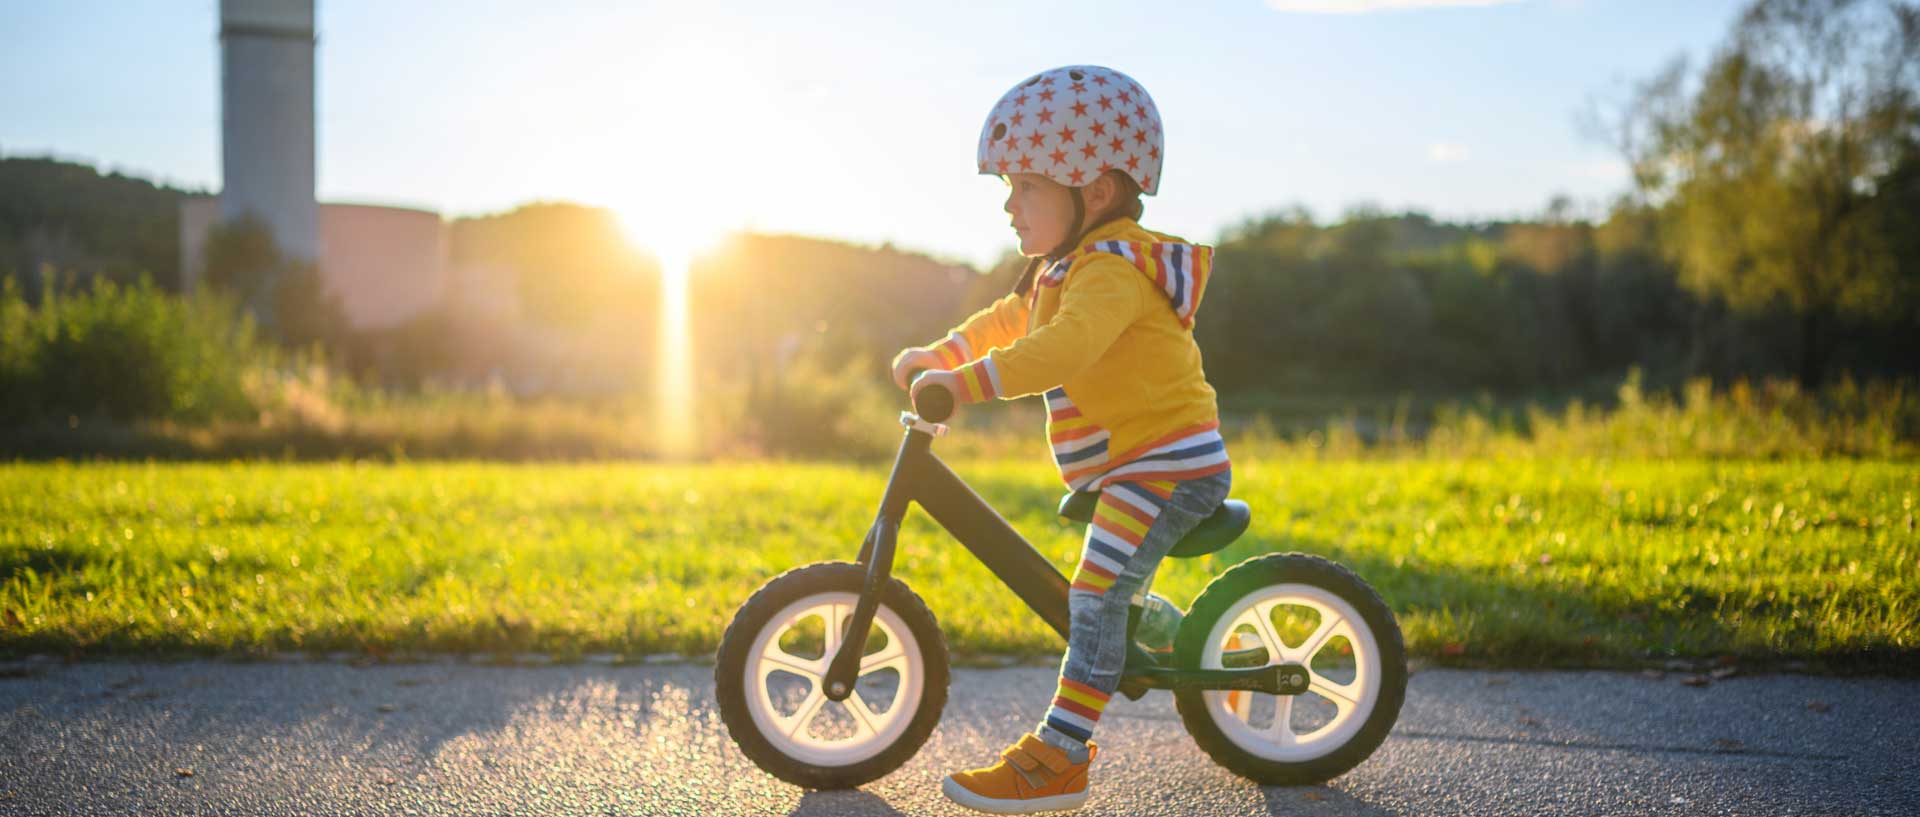 A young child on a balance bike